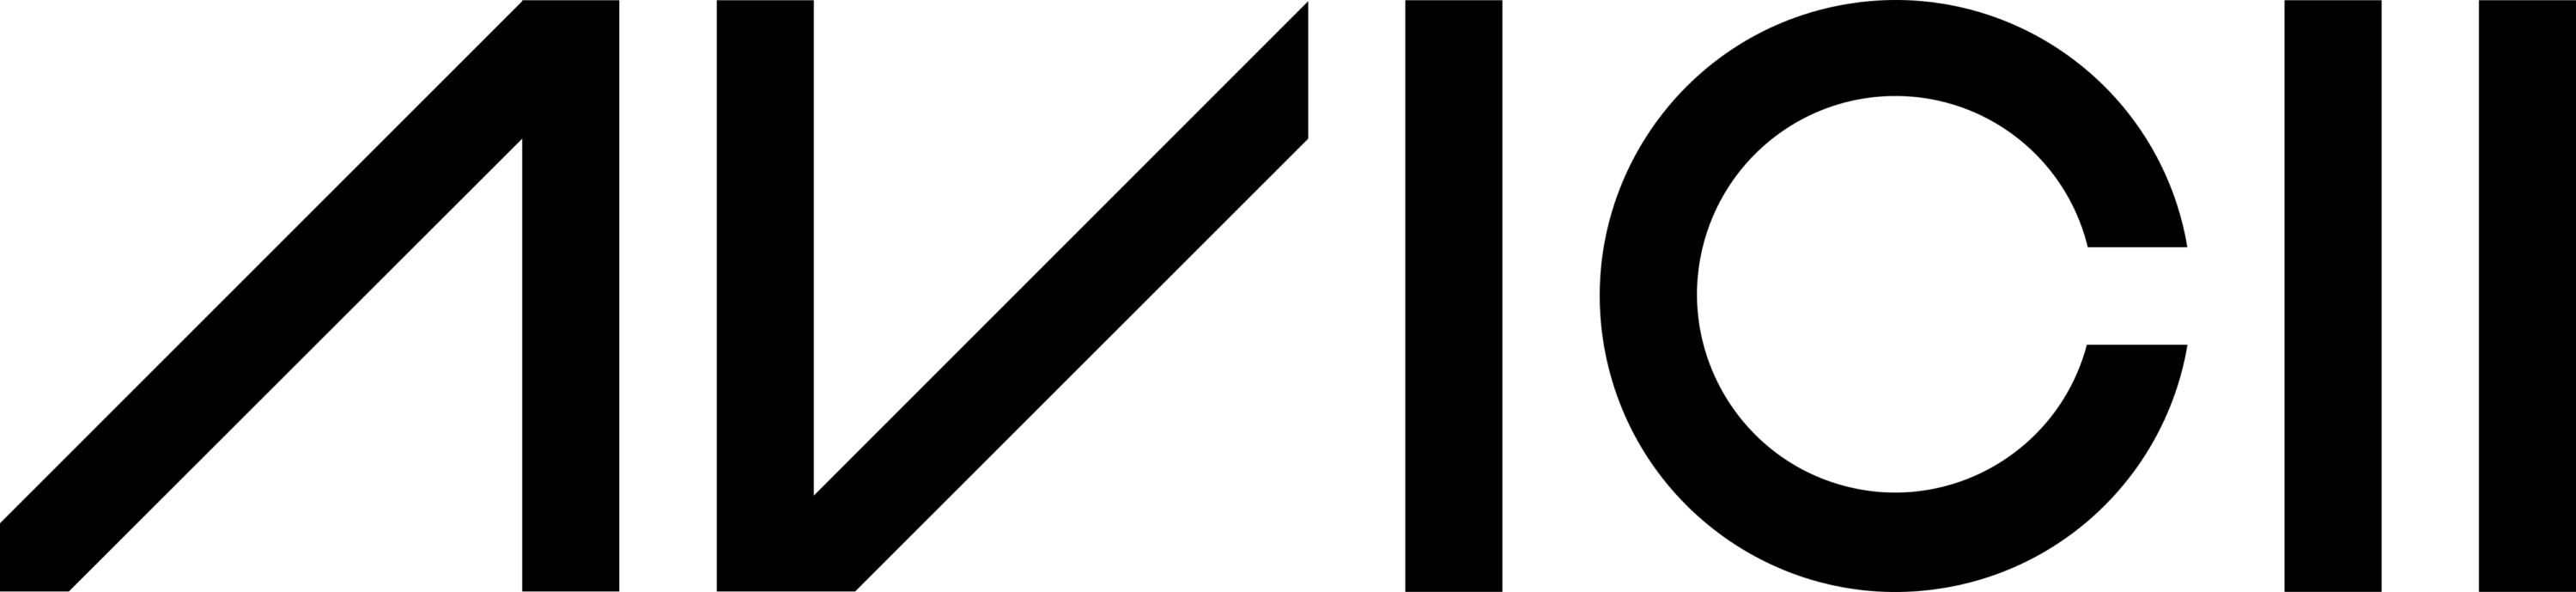 Avicii Arena Logo text